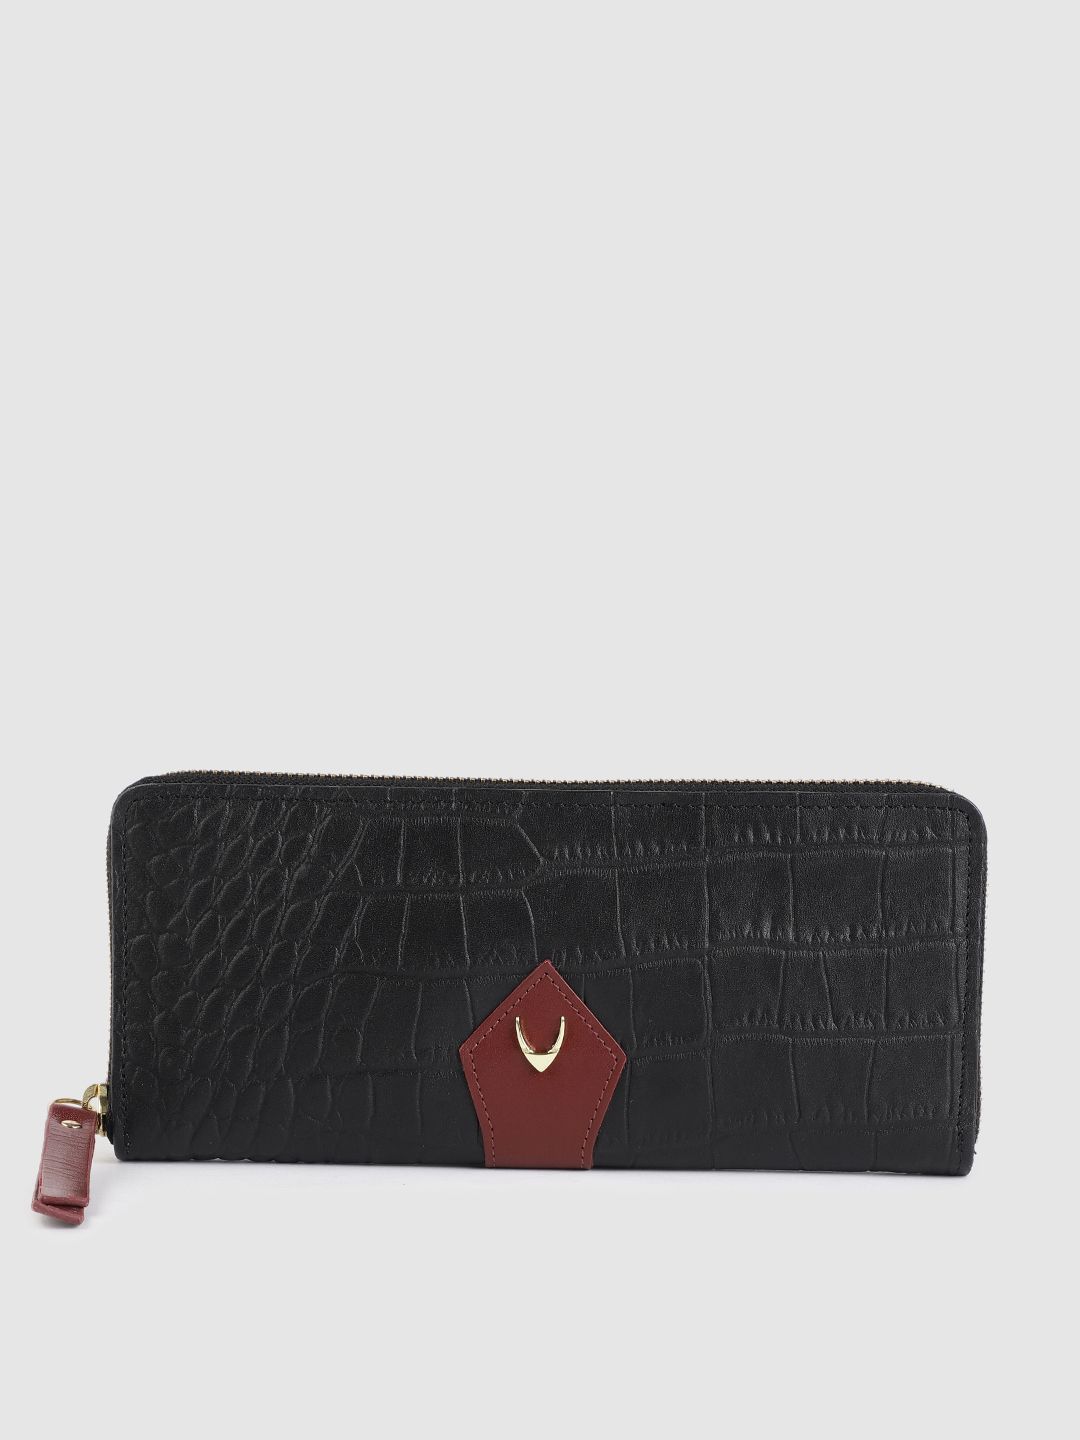 Hidesign Women Black Croc Textured Leather Zip Around Wallet Price in India